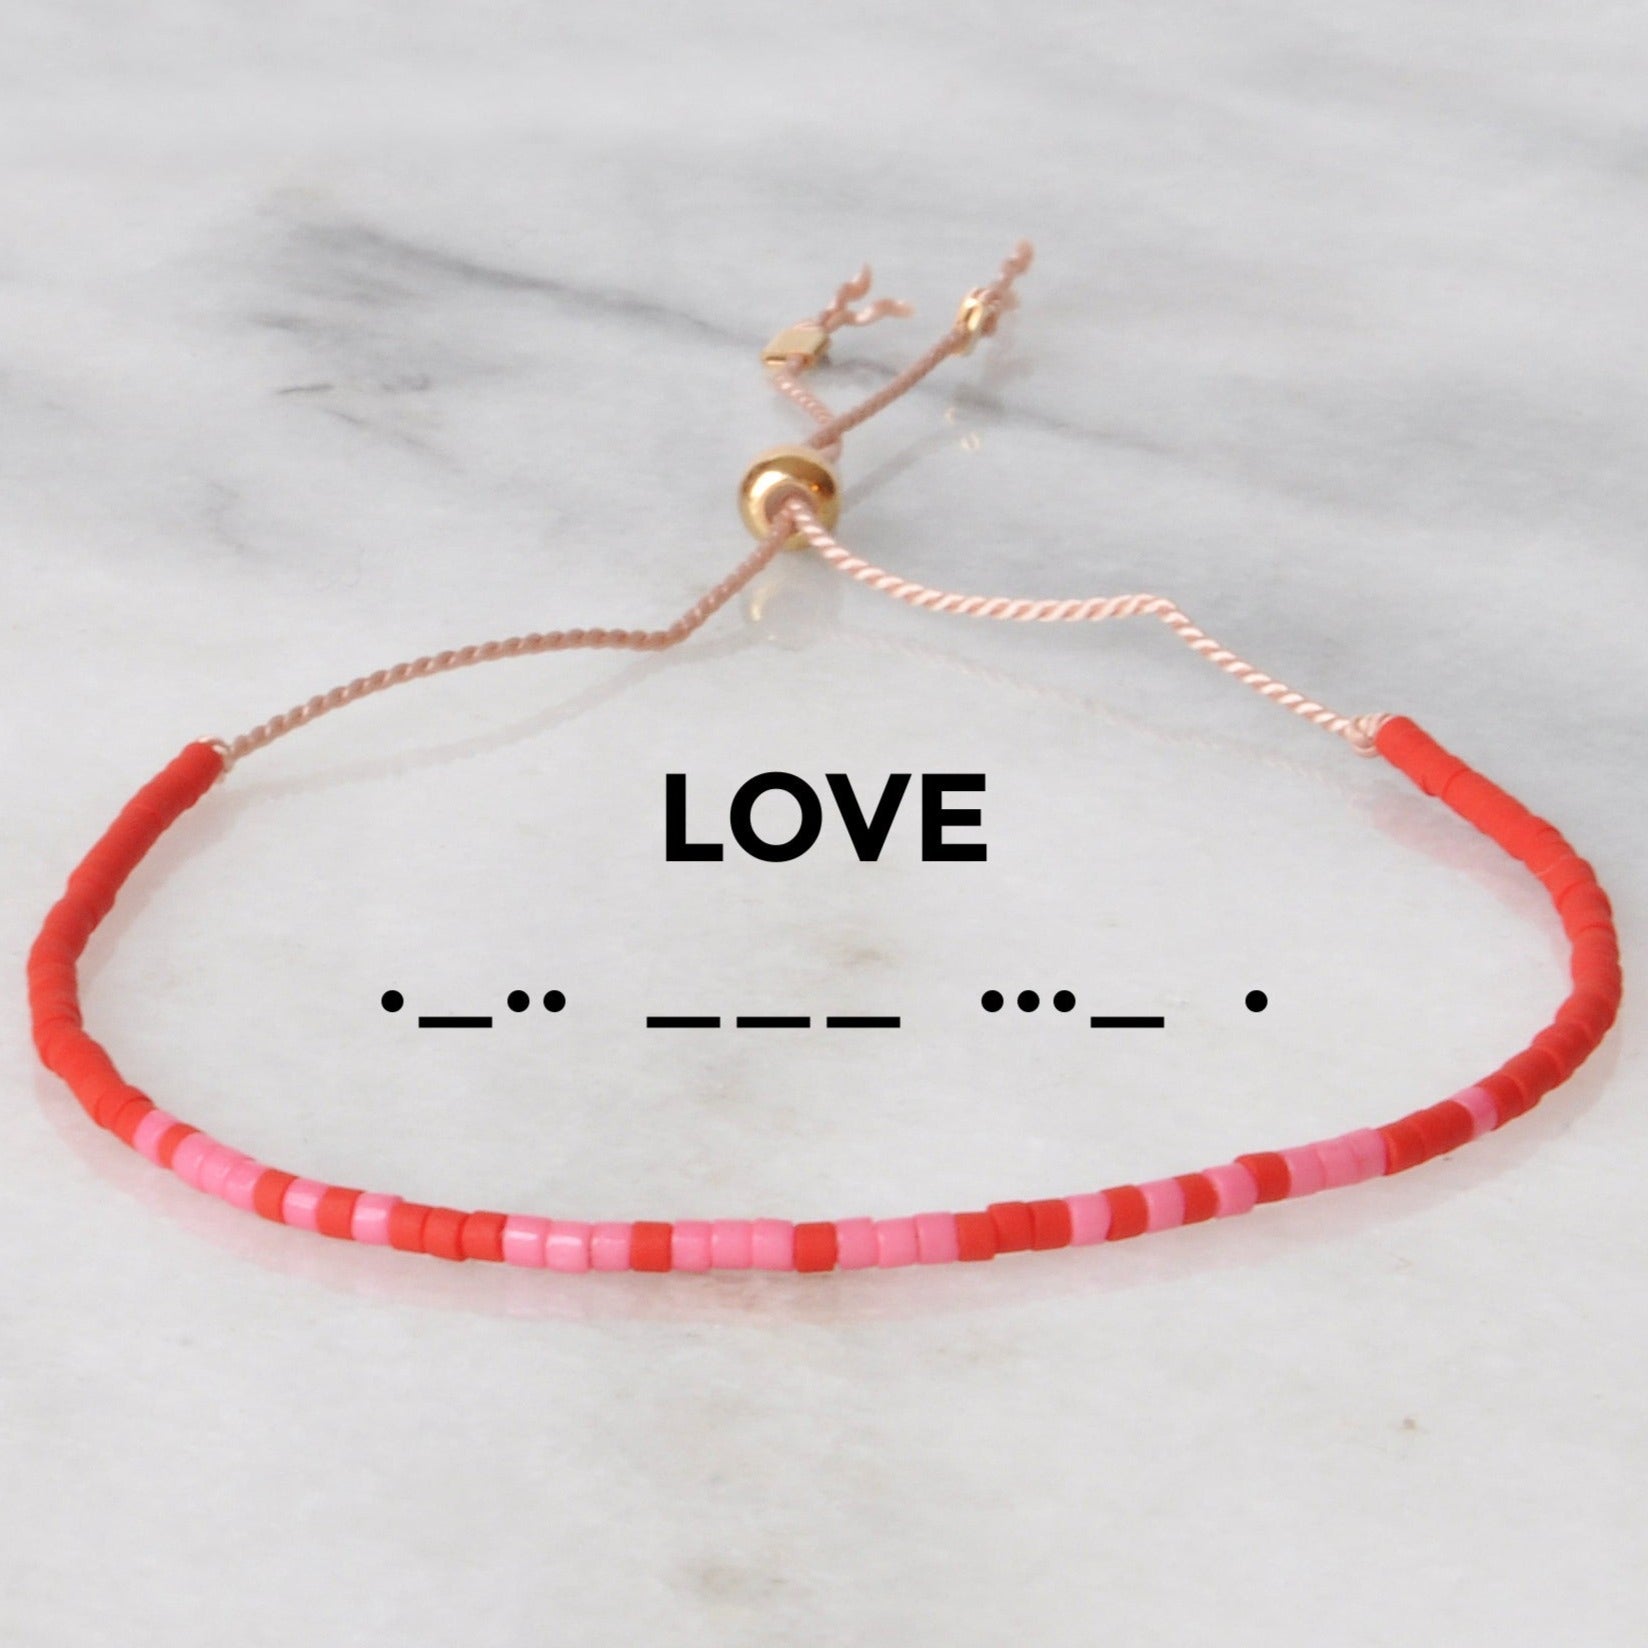 An inspiration of friendship bracelet making ideas with string | Friendship  bracelets tutorial, Friendship bracelets easy, String friendship bracelets